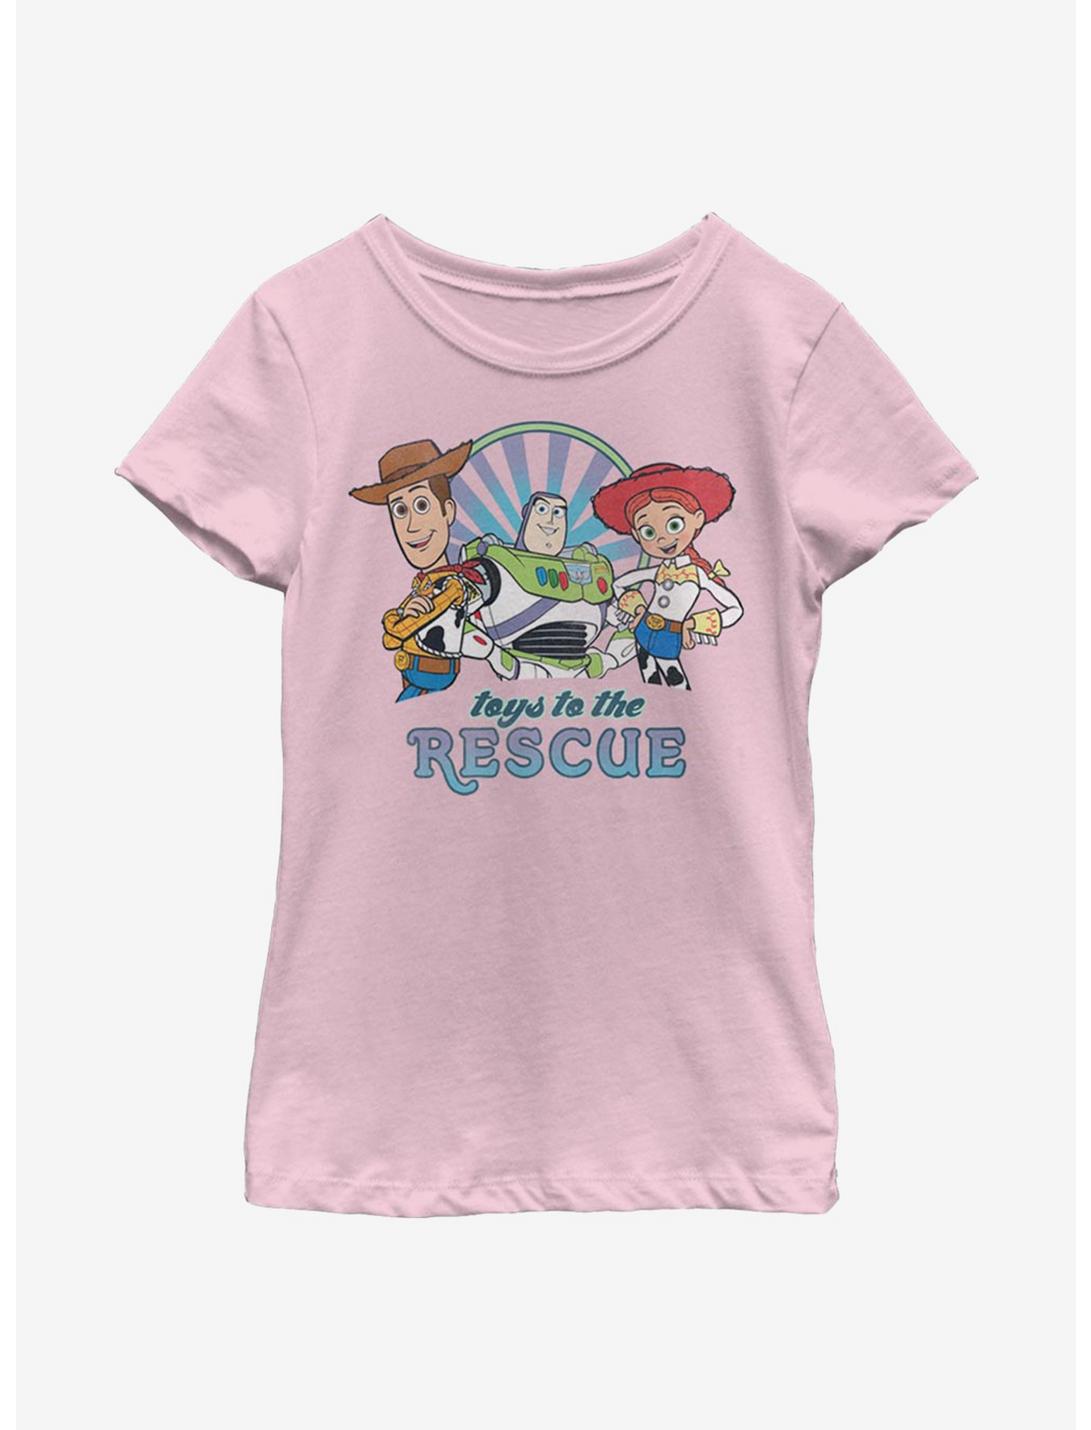 Disney Pixar Toy Story 4 Rescue Youth Girls T-Shirt, PINK, hi-res